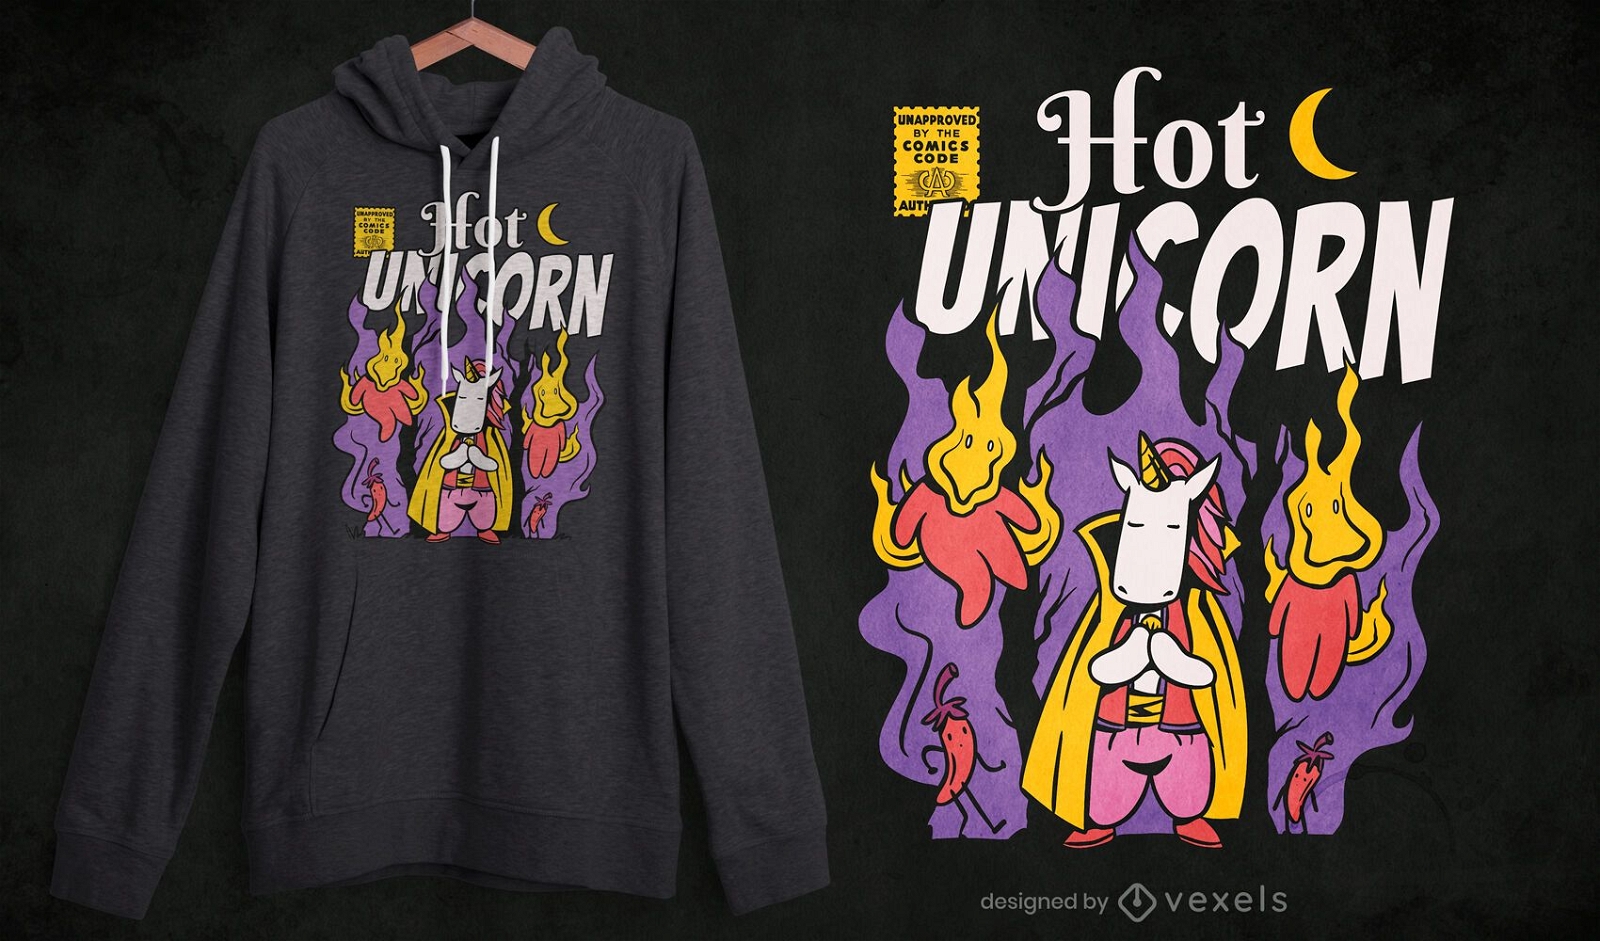 Hot unicorn cartoon t-shirt design